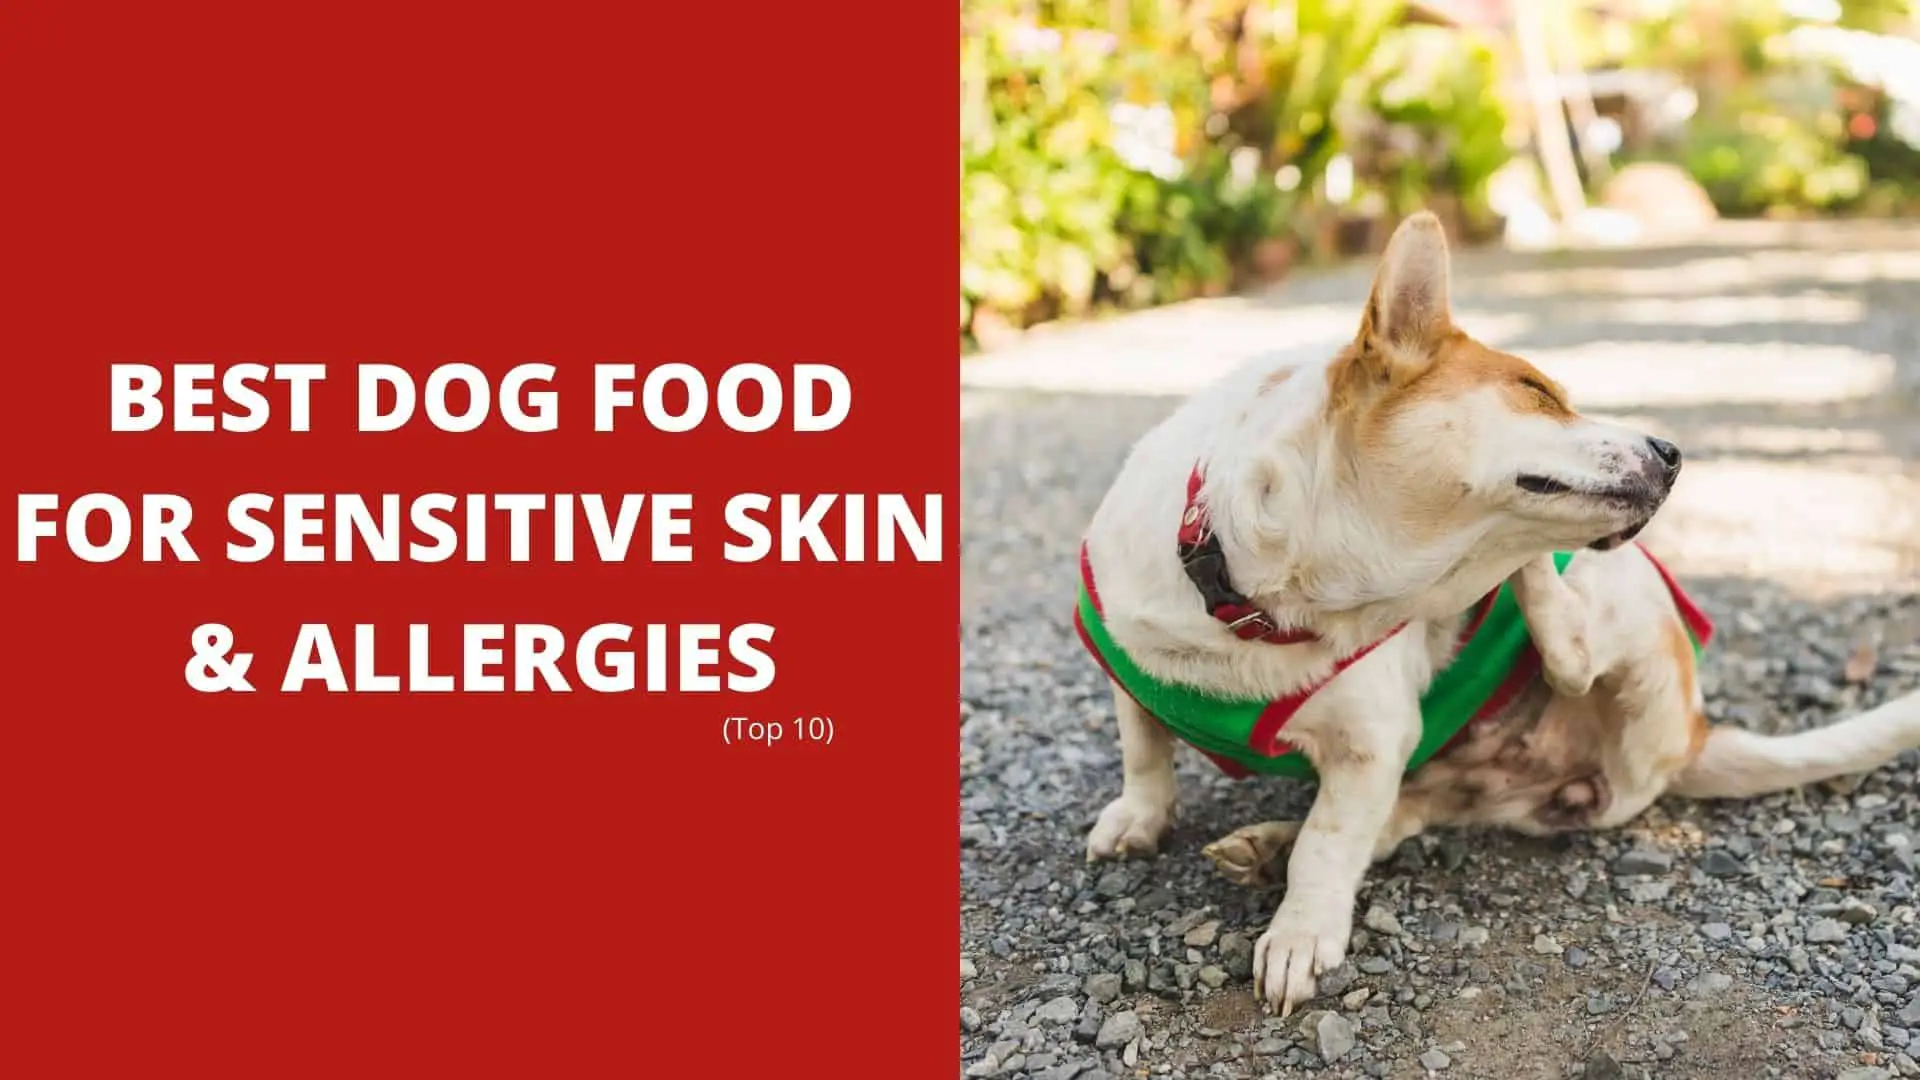 Top 10 Best Dog Food for Sensitive Skin & Allergies